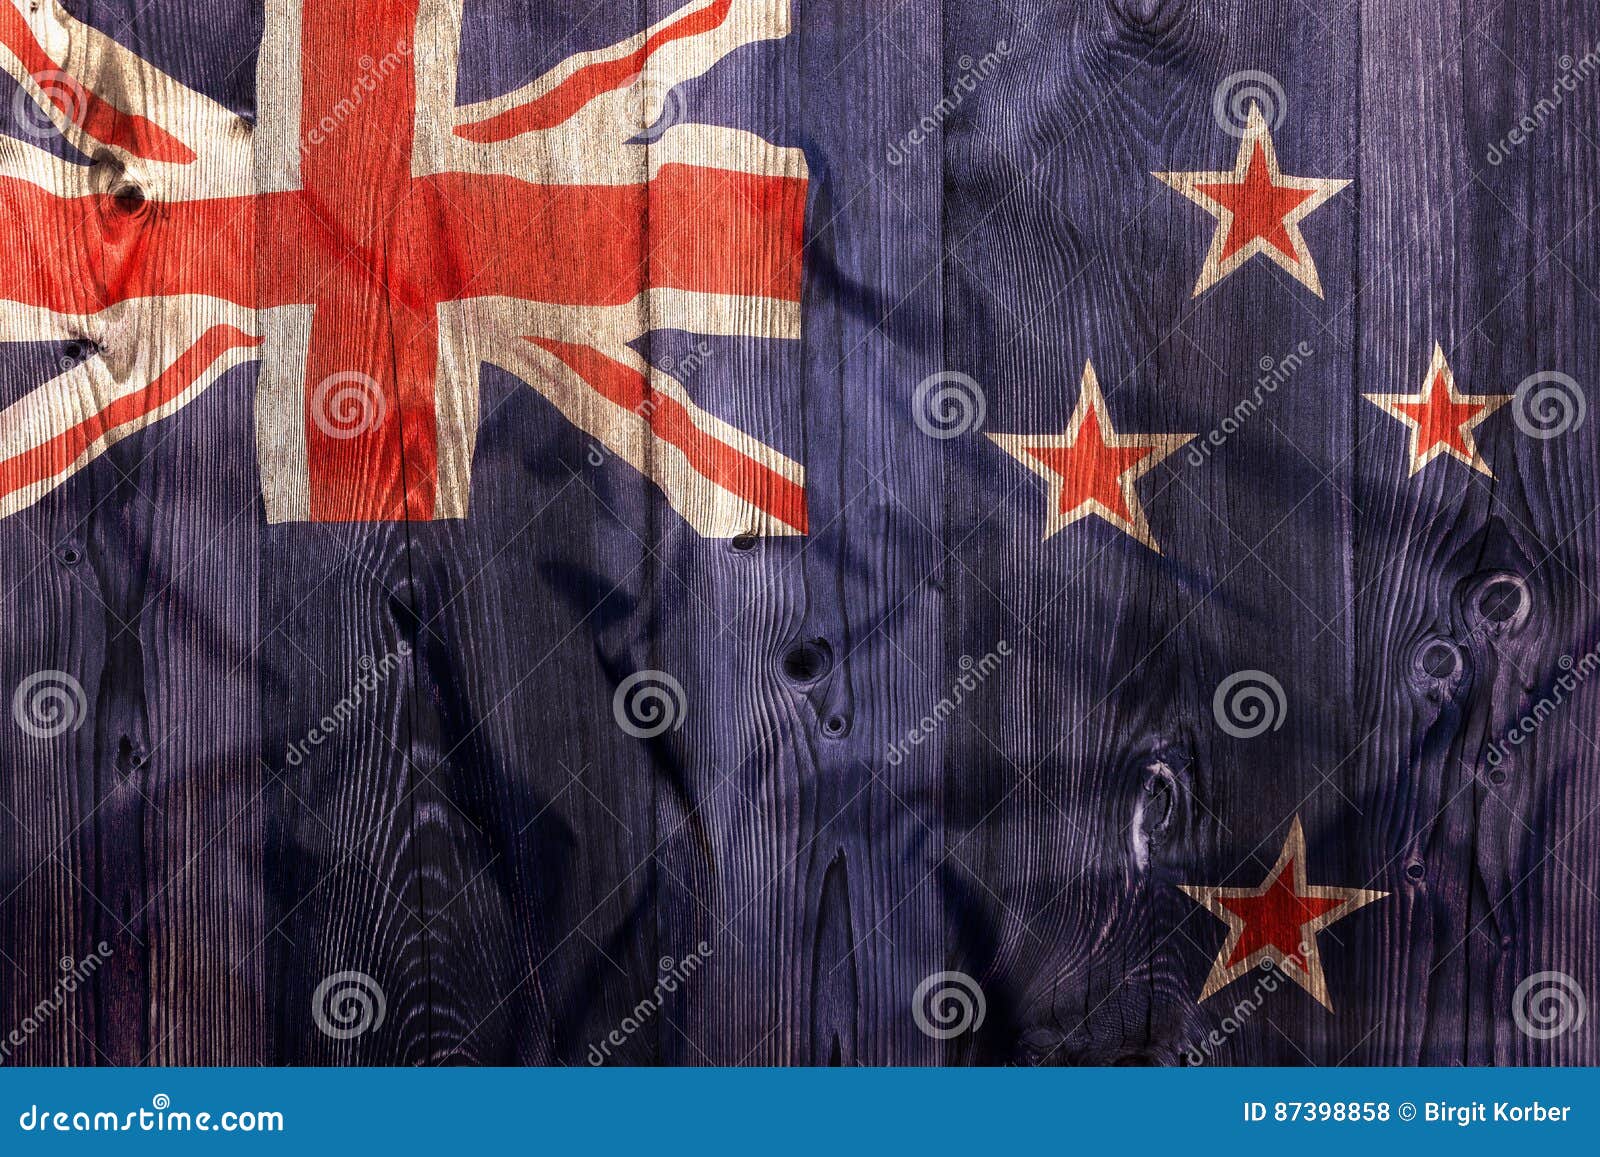 50+ New Zealand 国旗 - クアンプレタン